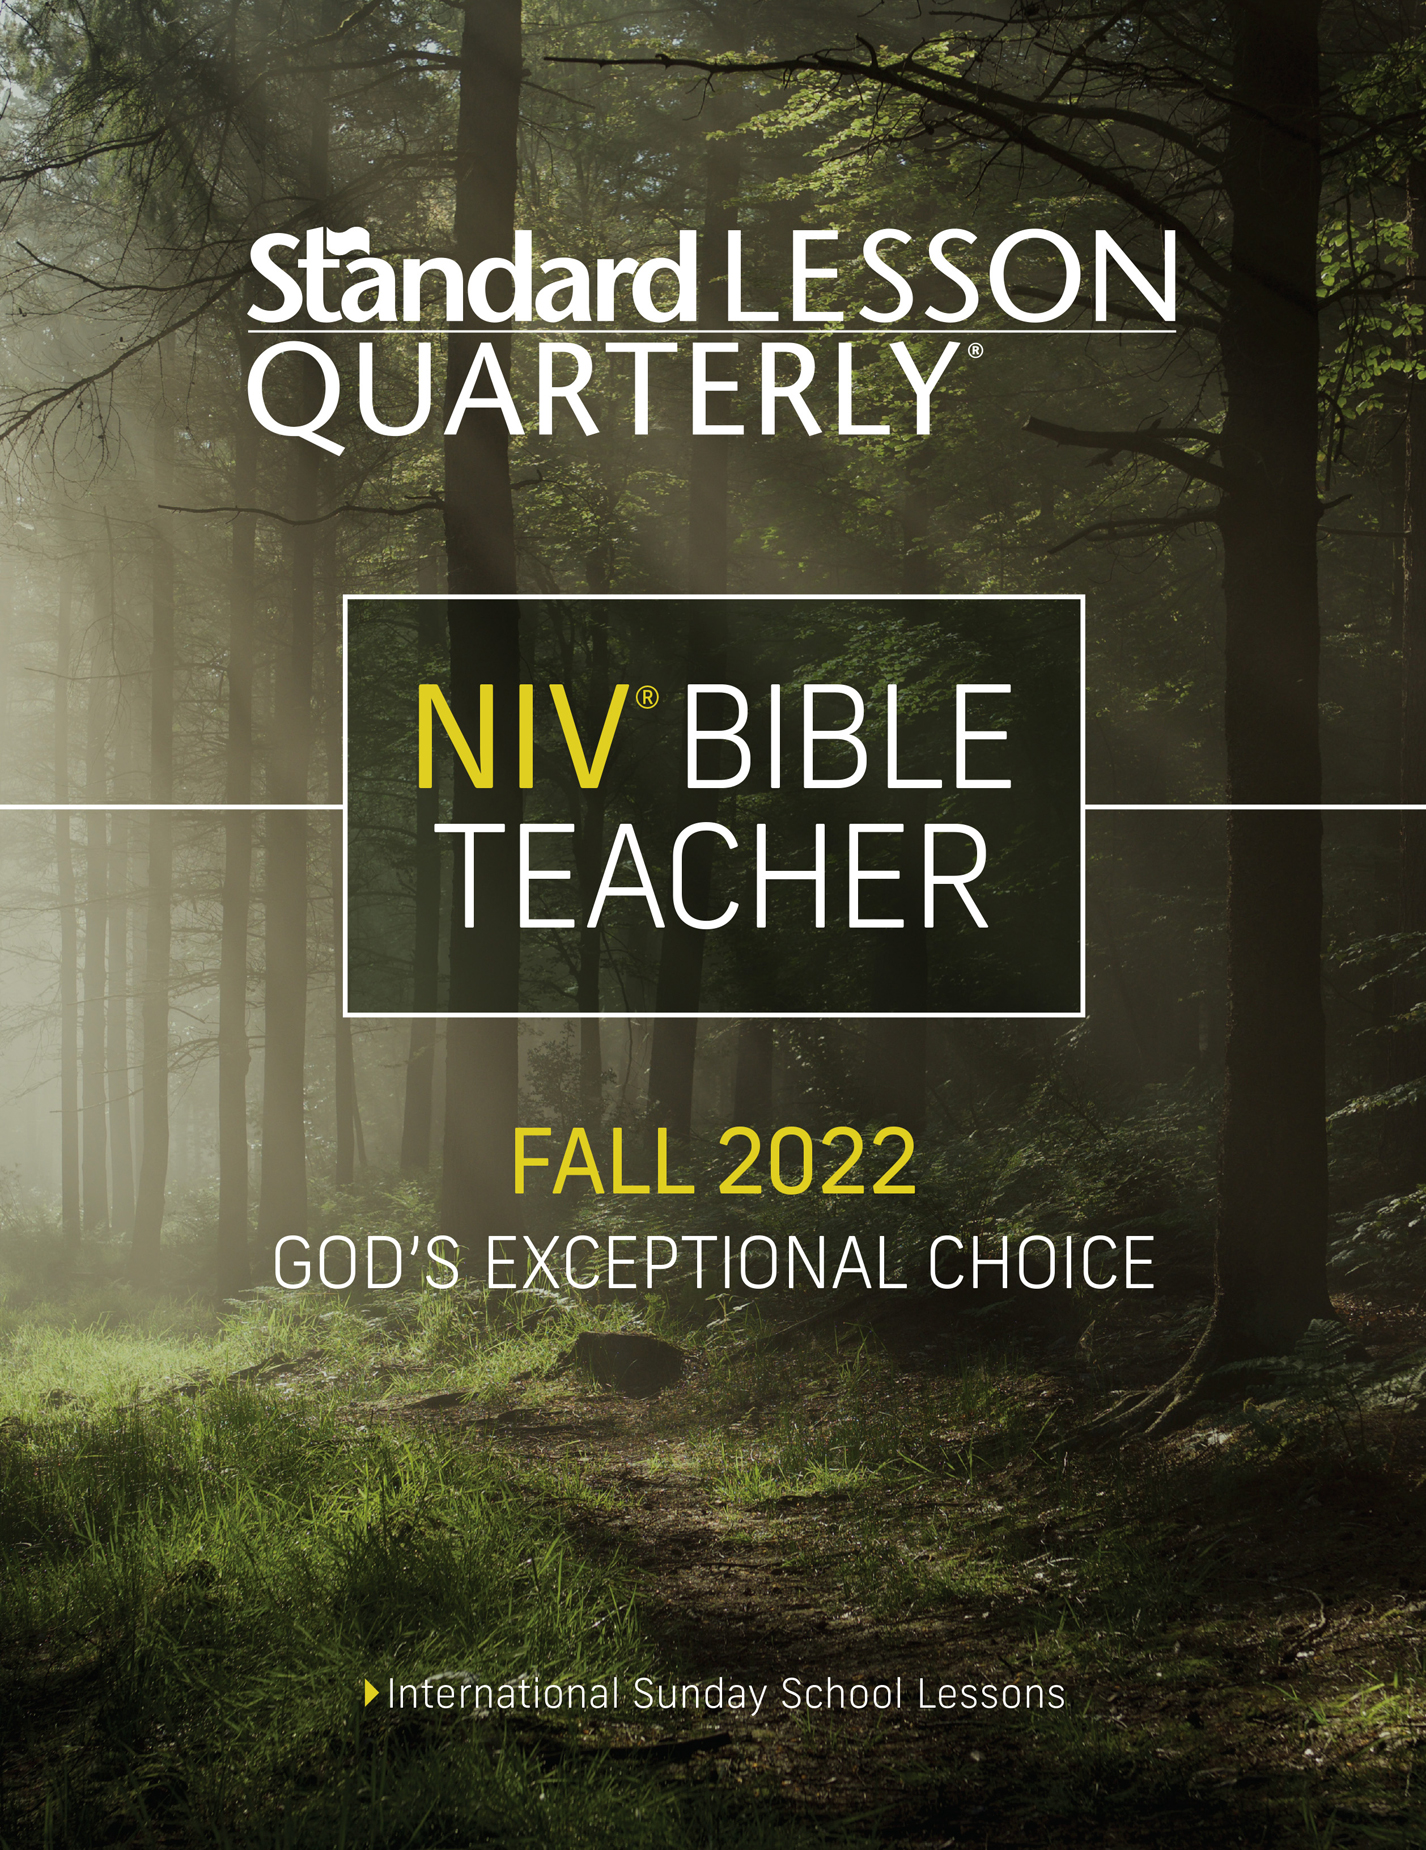 Standard Lesson Bible Teacher image